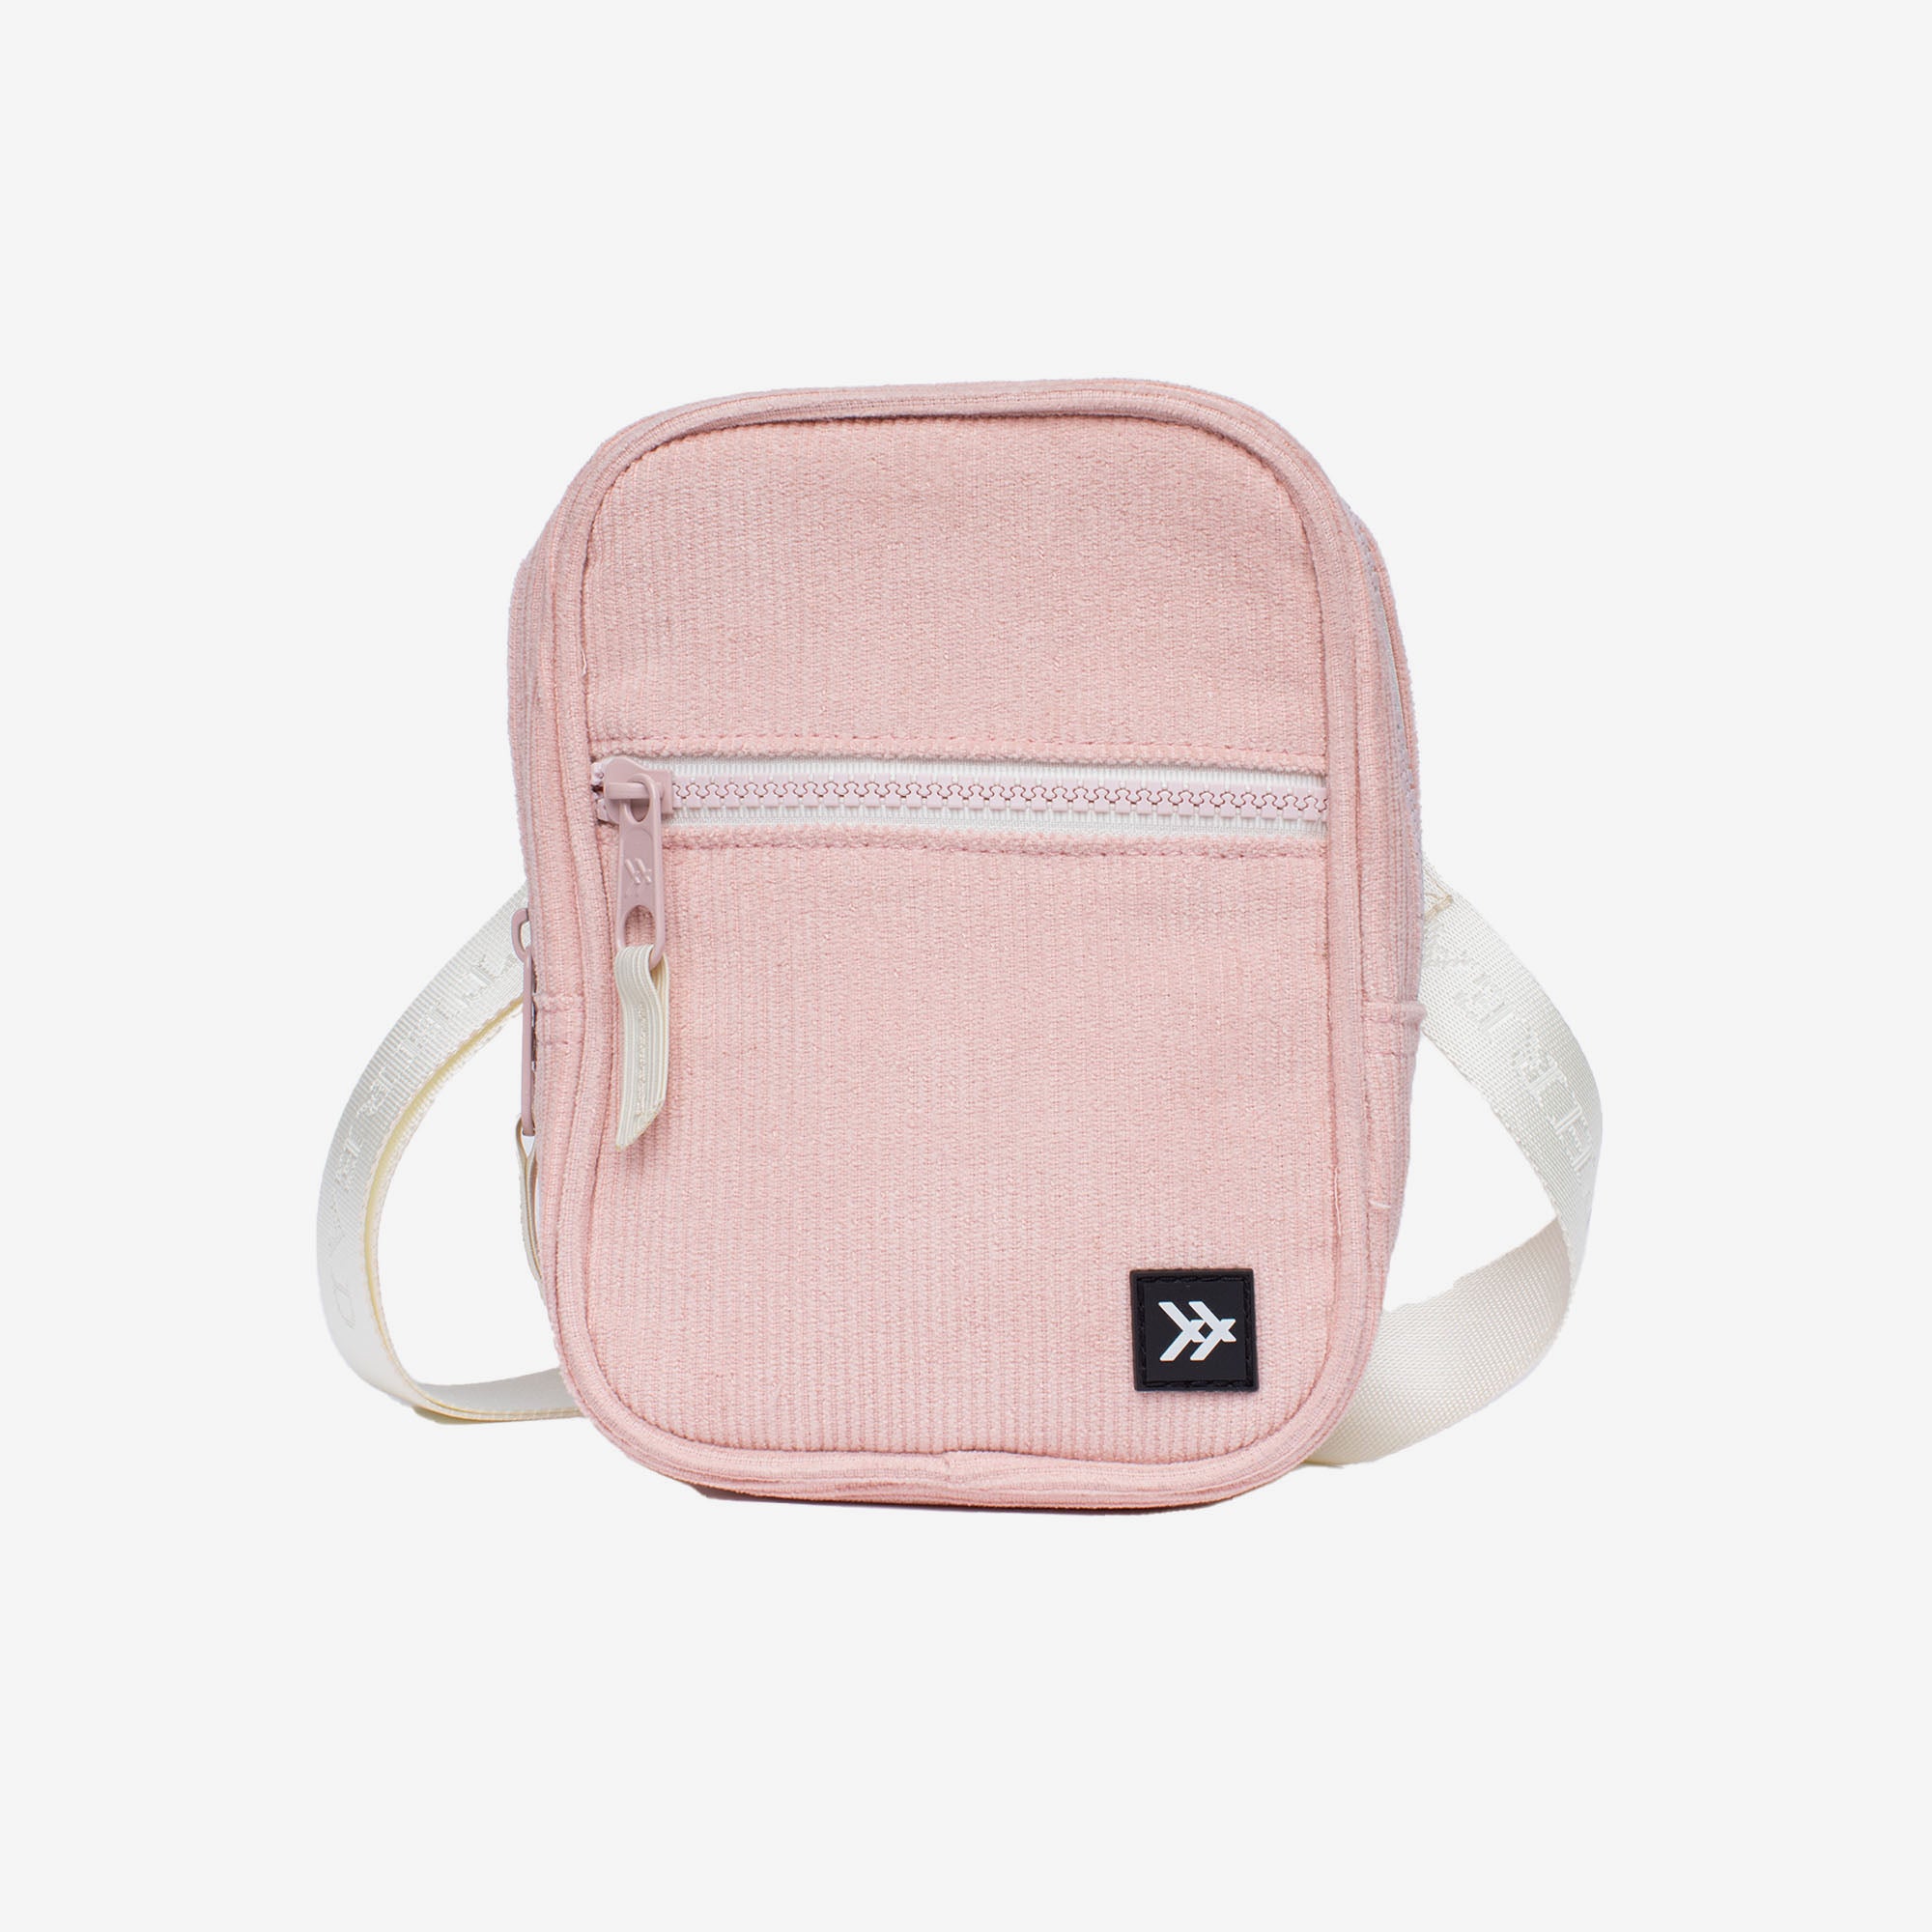 Pink cordueroy crossbody bag